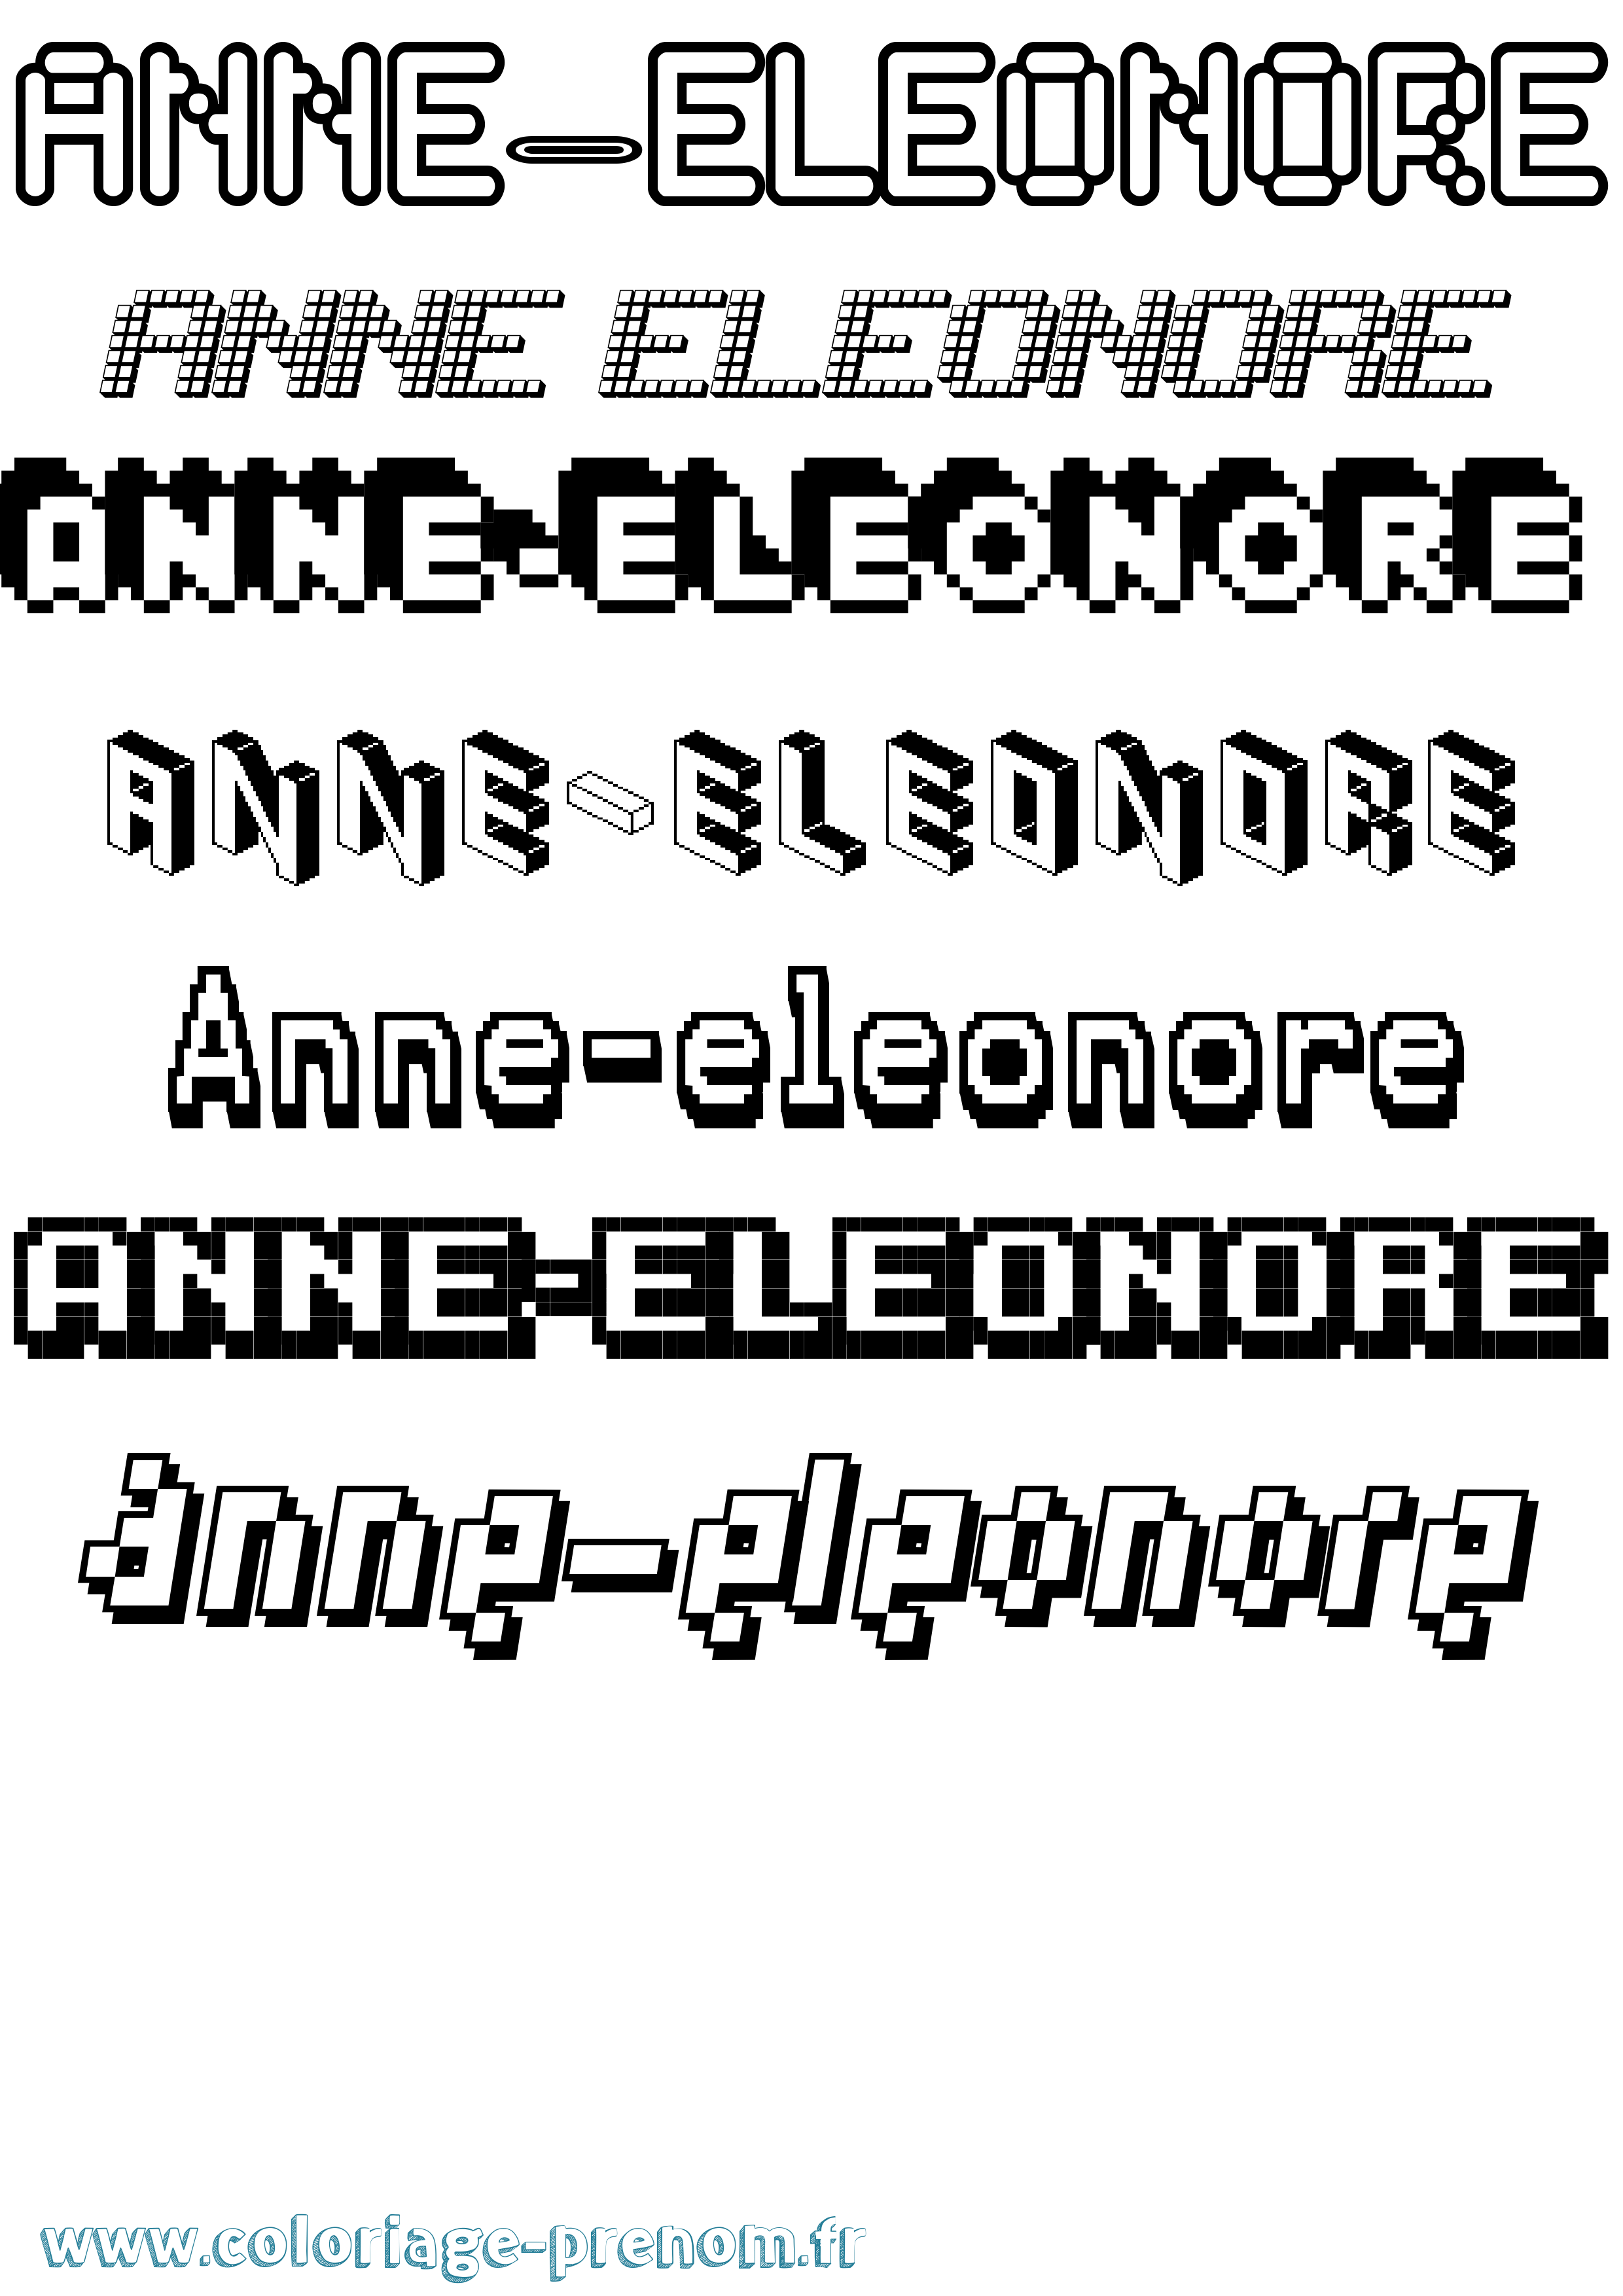 Coloriage prénom Anne-Eleonore Pixel